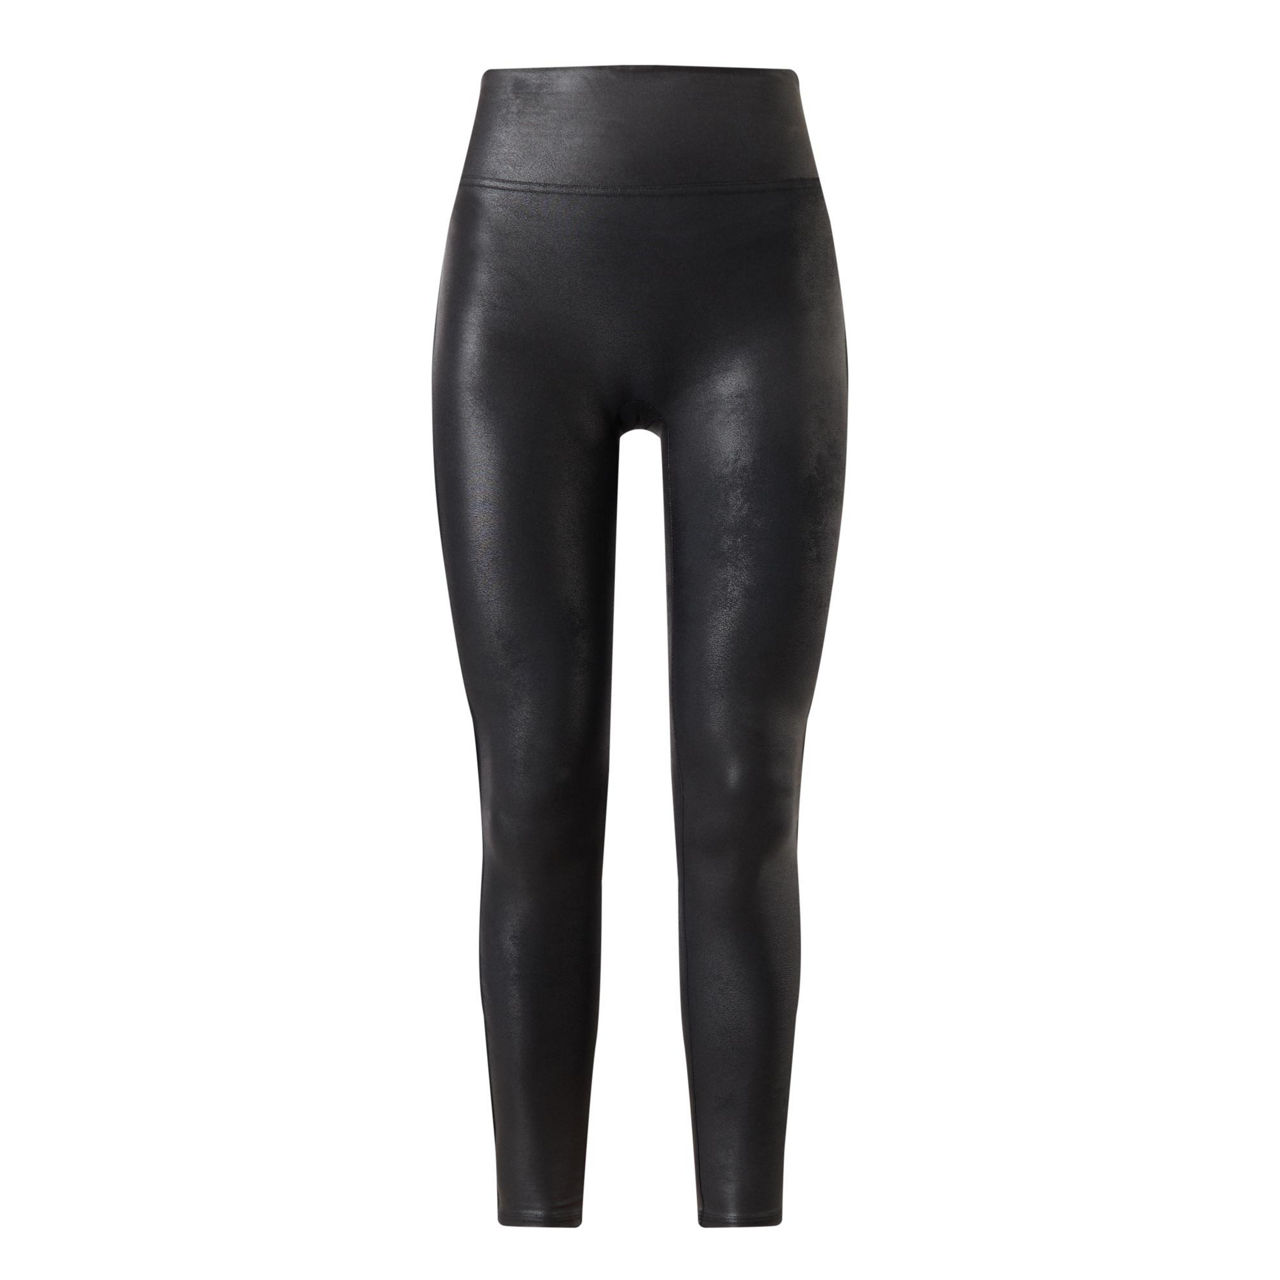 Petite Length Leggings WET LOOK Shiny Pants Stretch Black 6 8 10